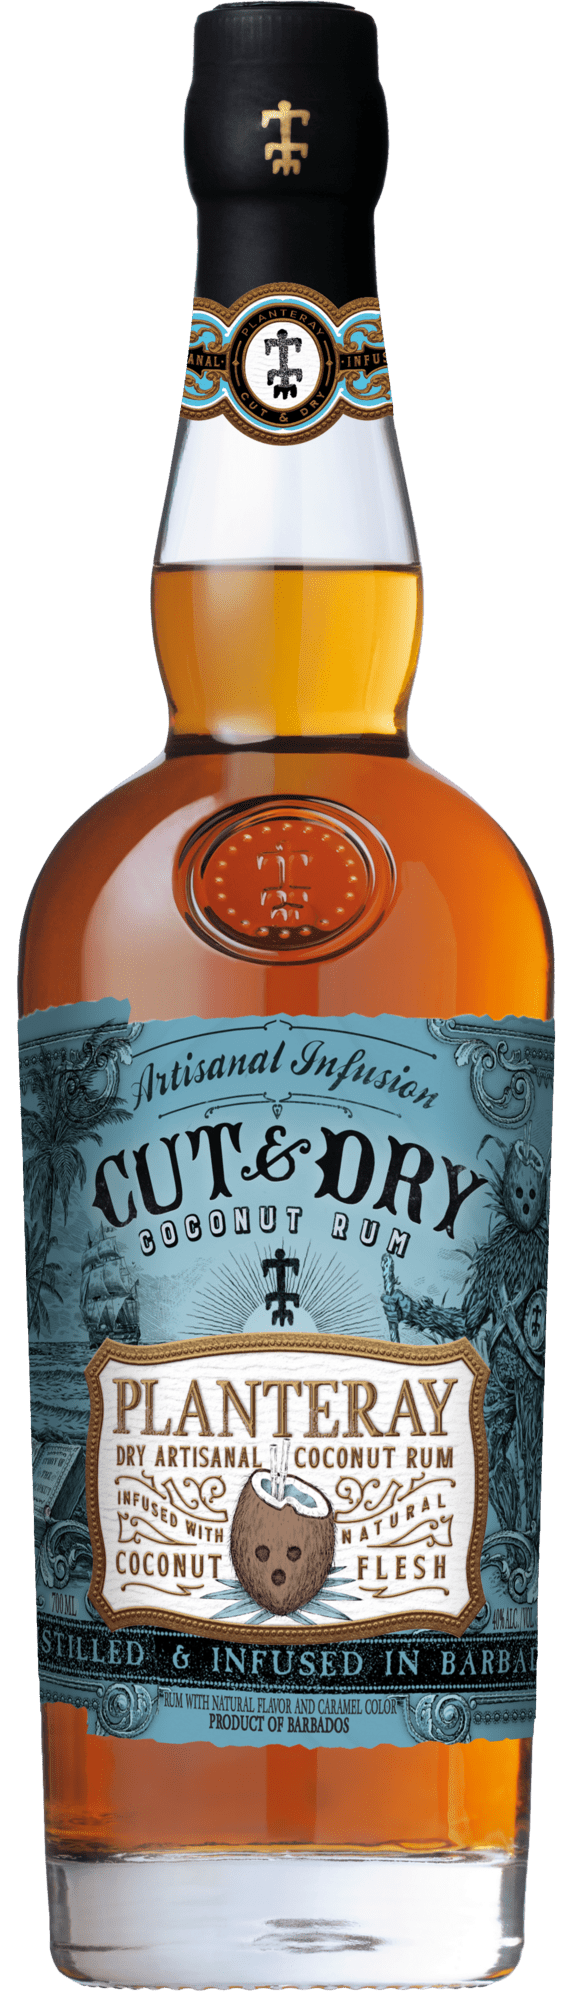 Planteray Cut & Dry